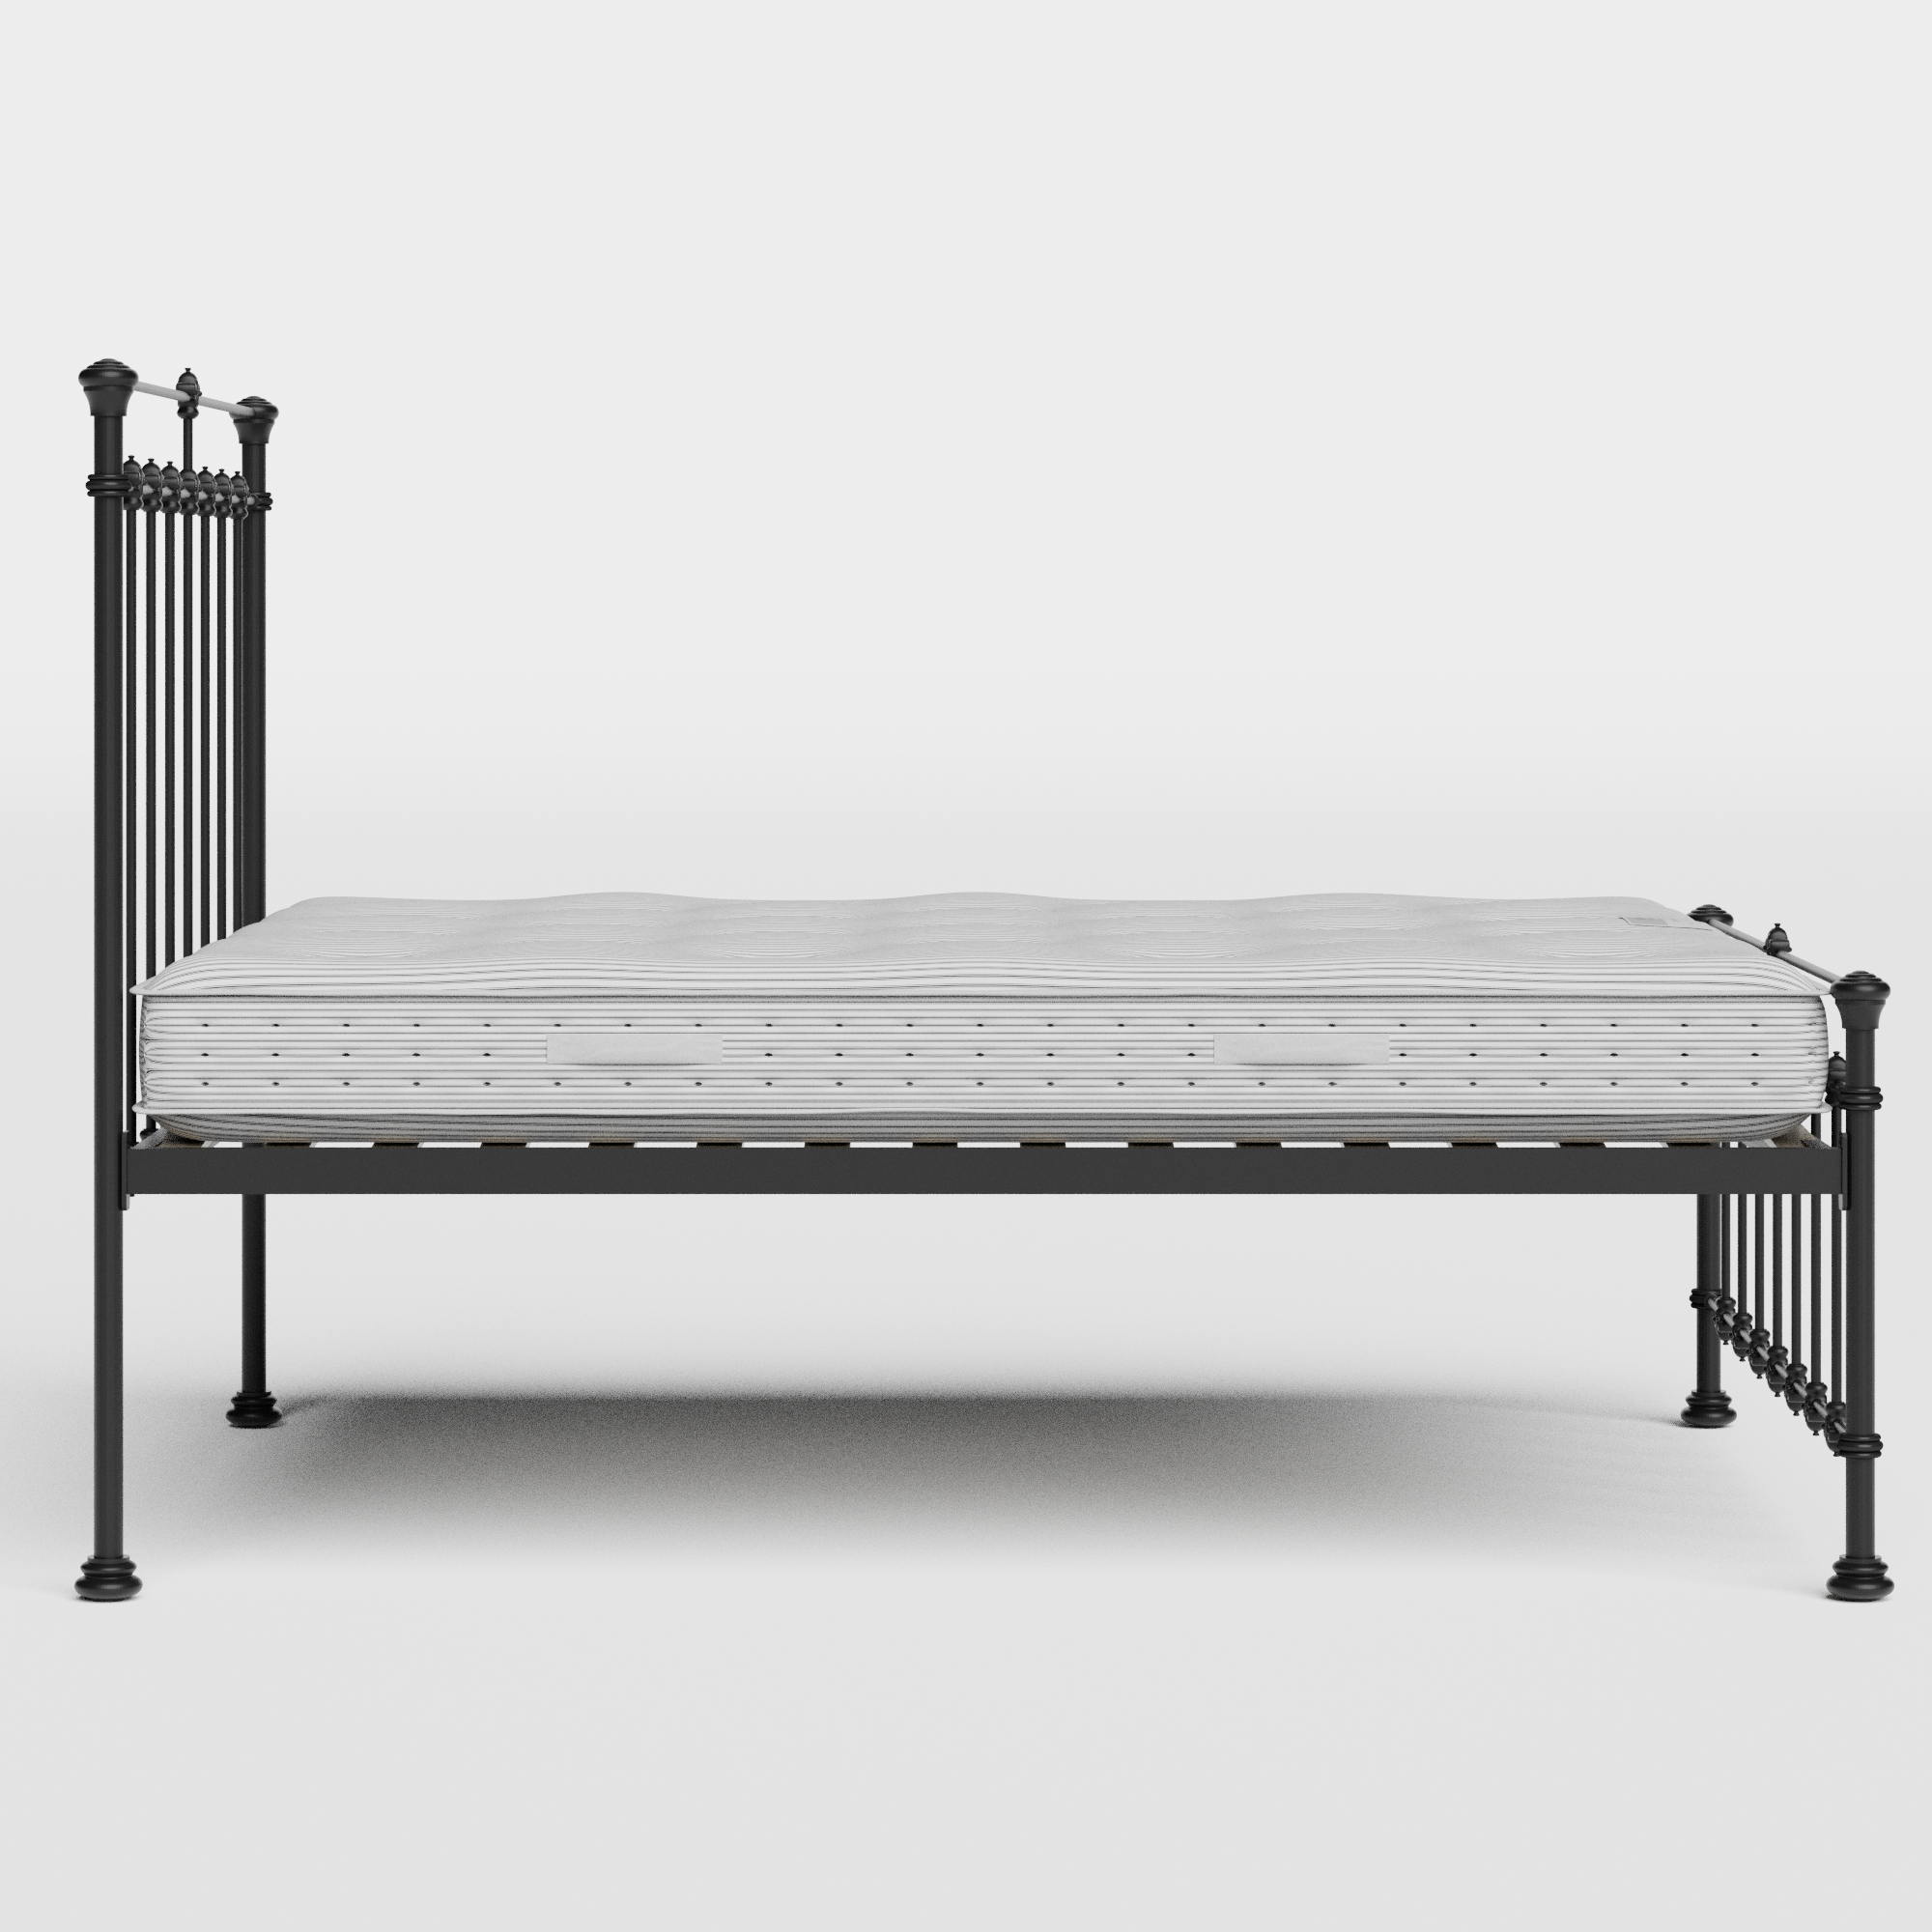 Edwardian cama de metal en negro con colchón